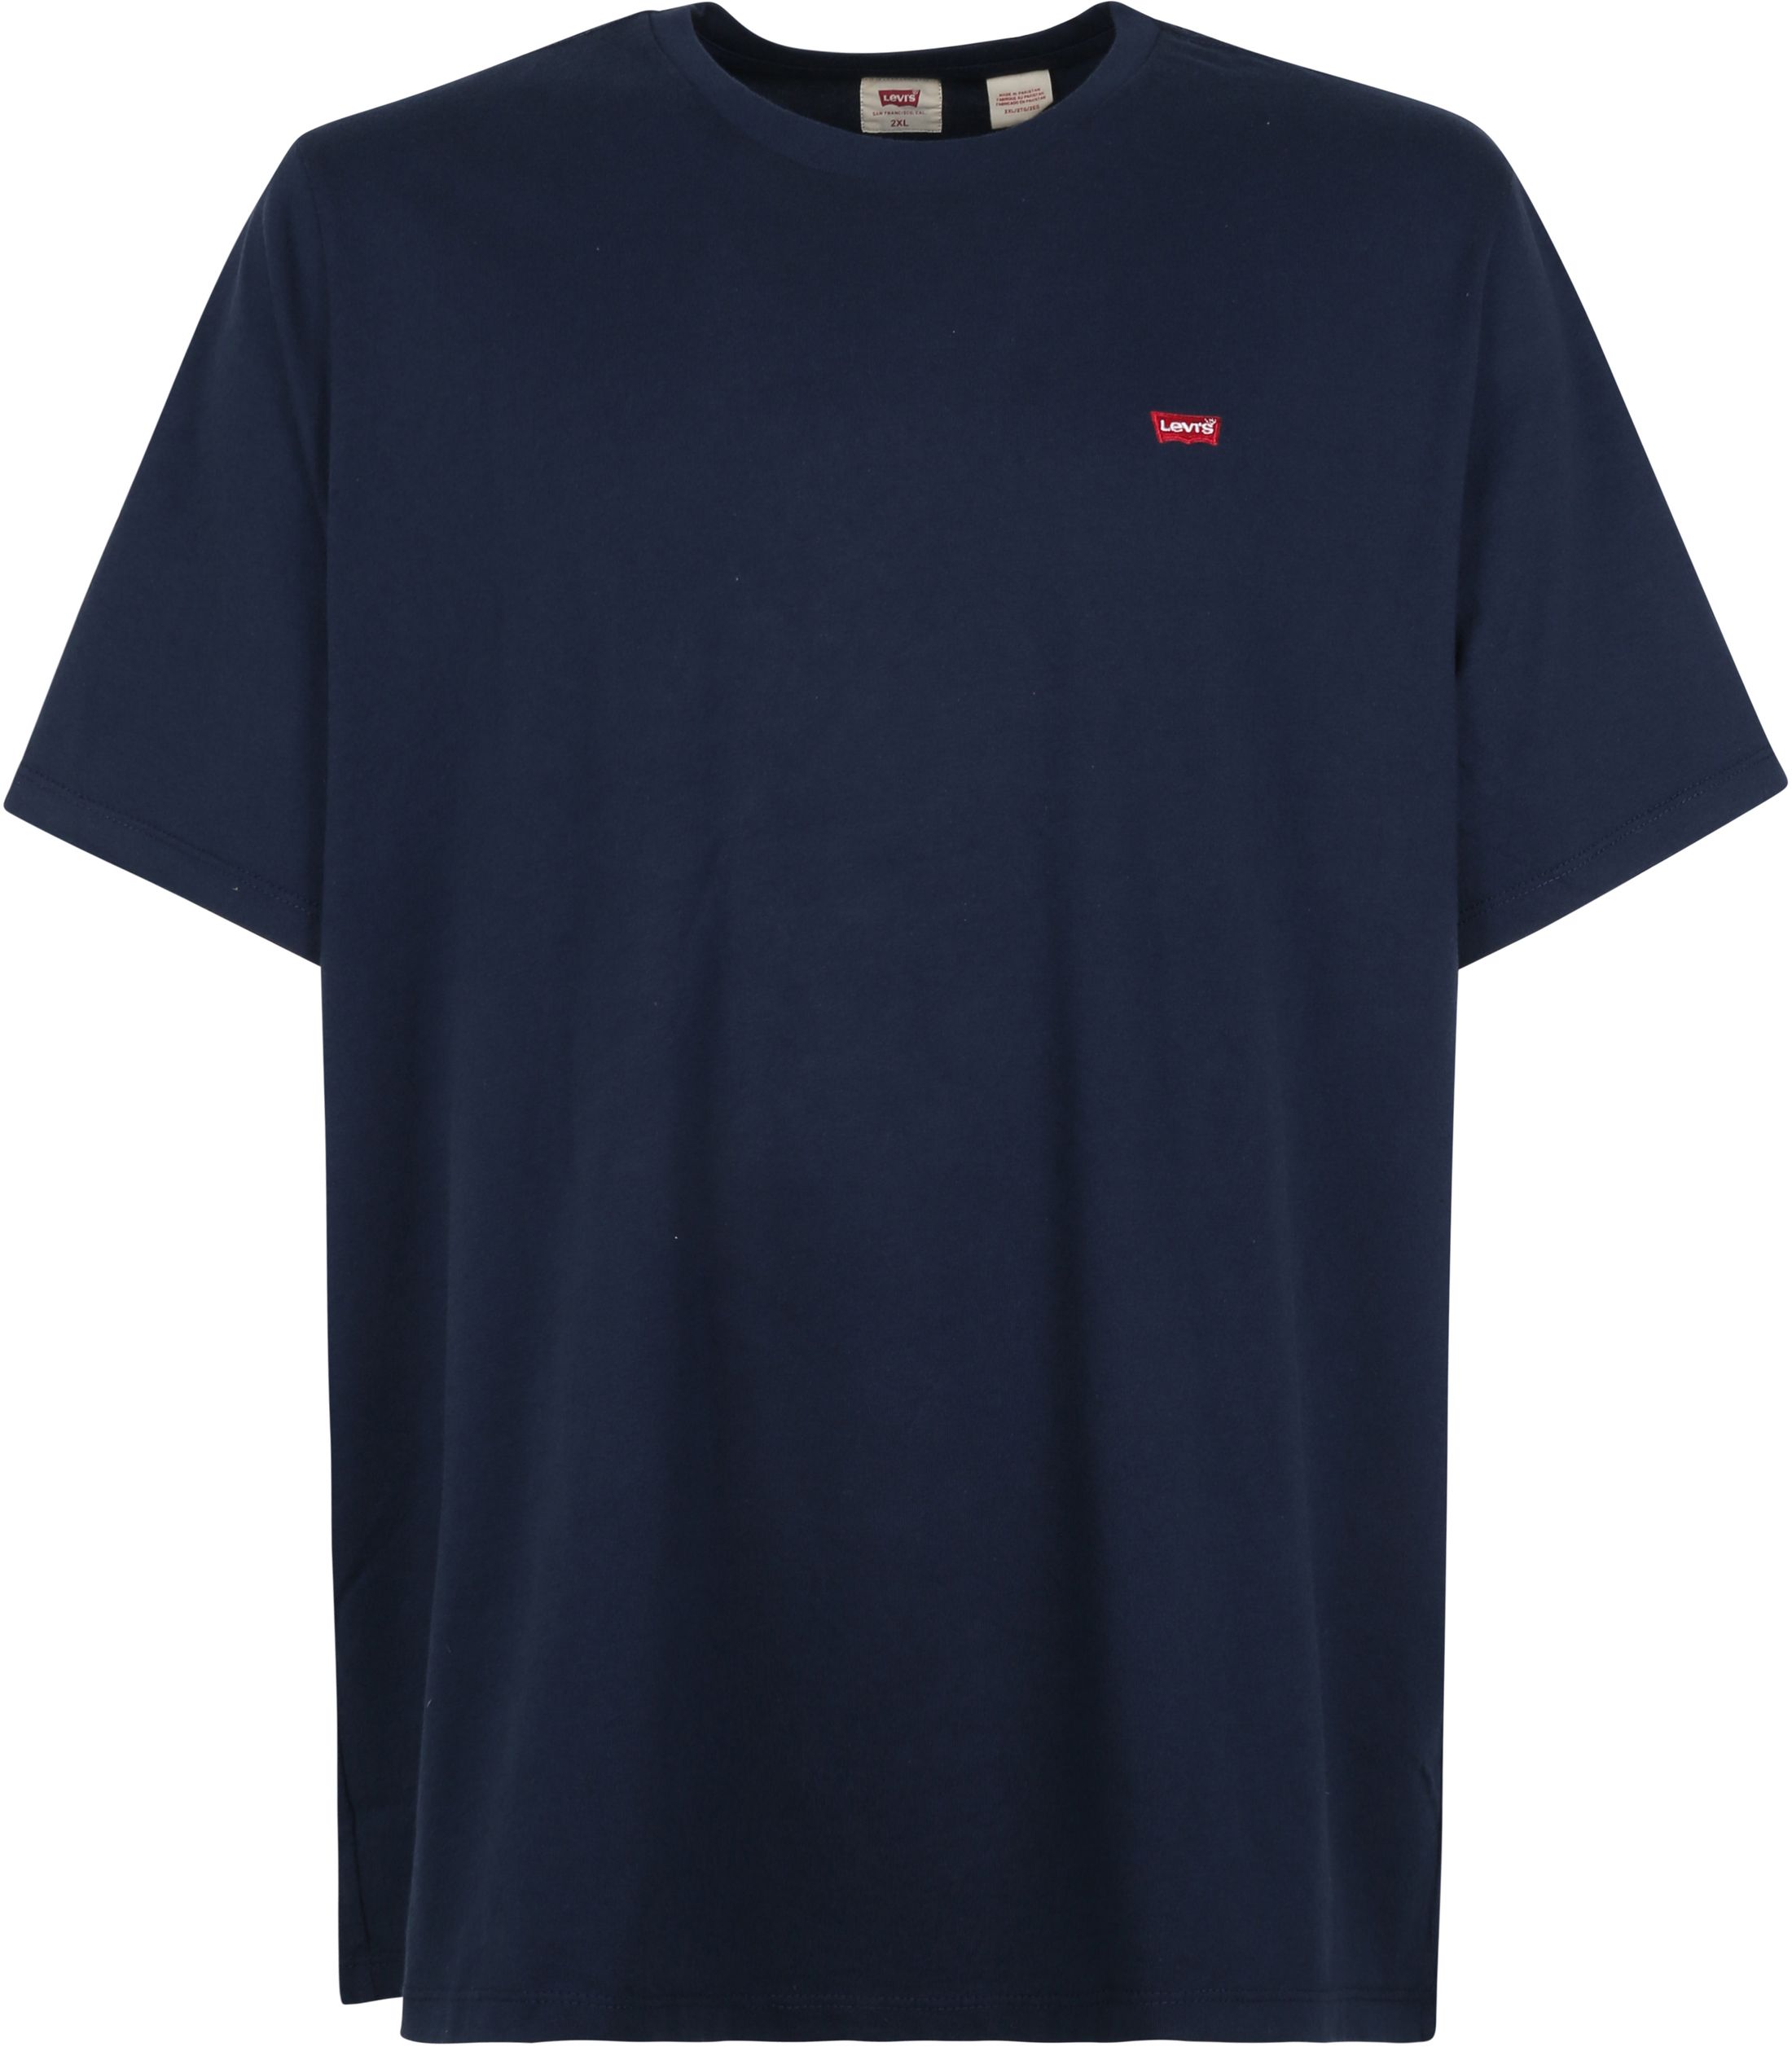 Levi's Big T Shirt Original Dark Blue Dark Blue size 4XL